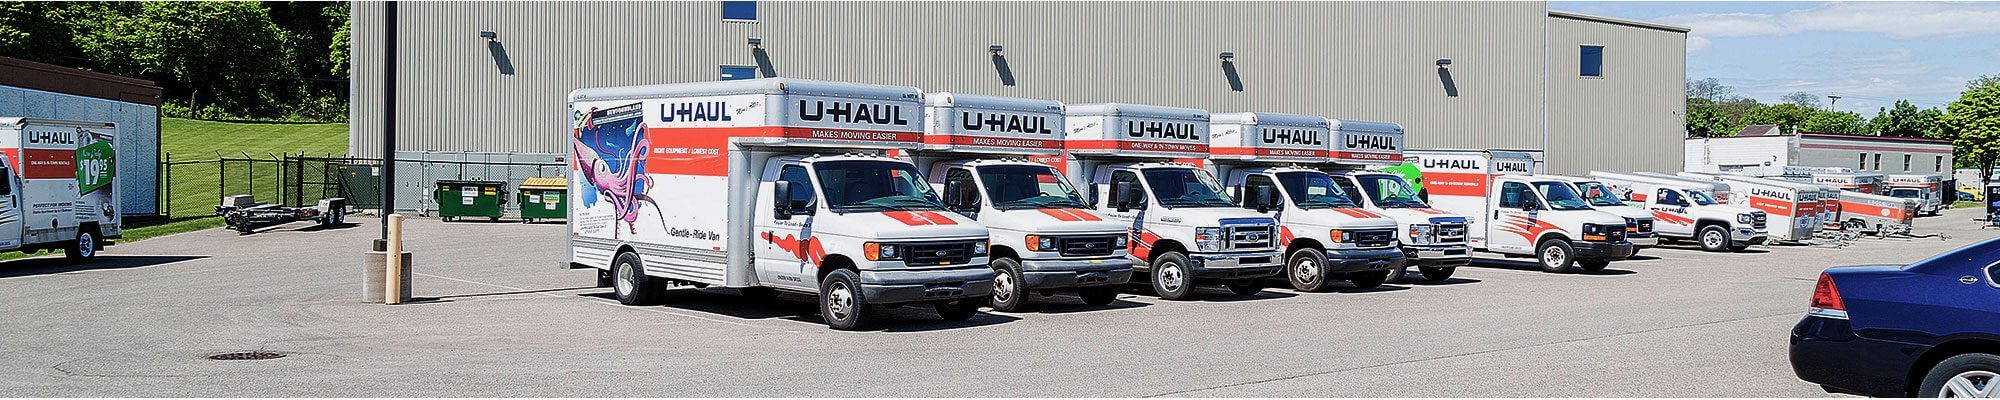 u-haul trucks and trailers